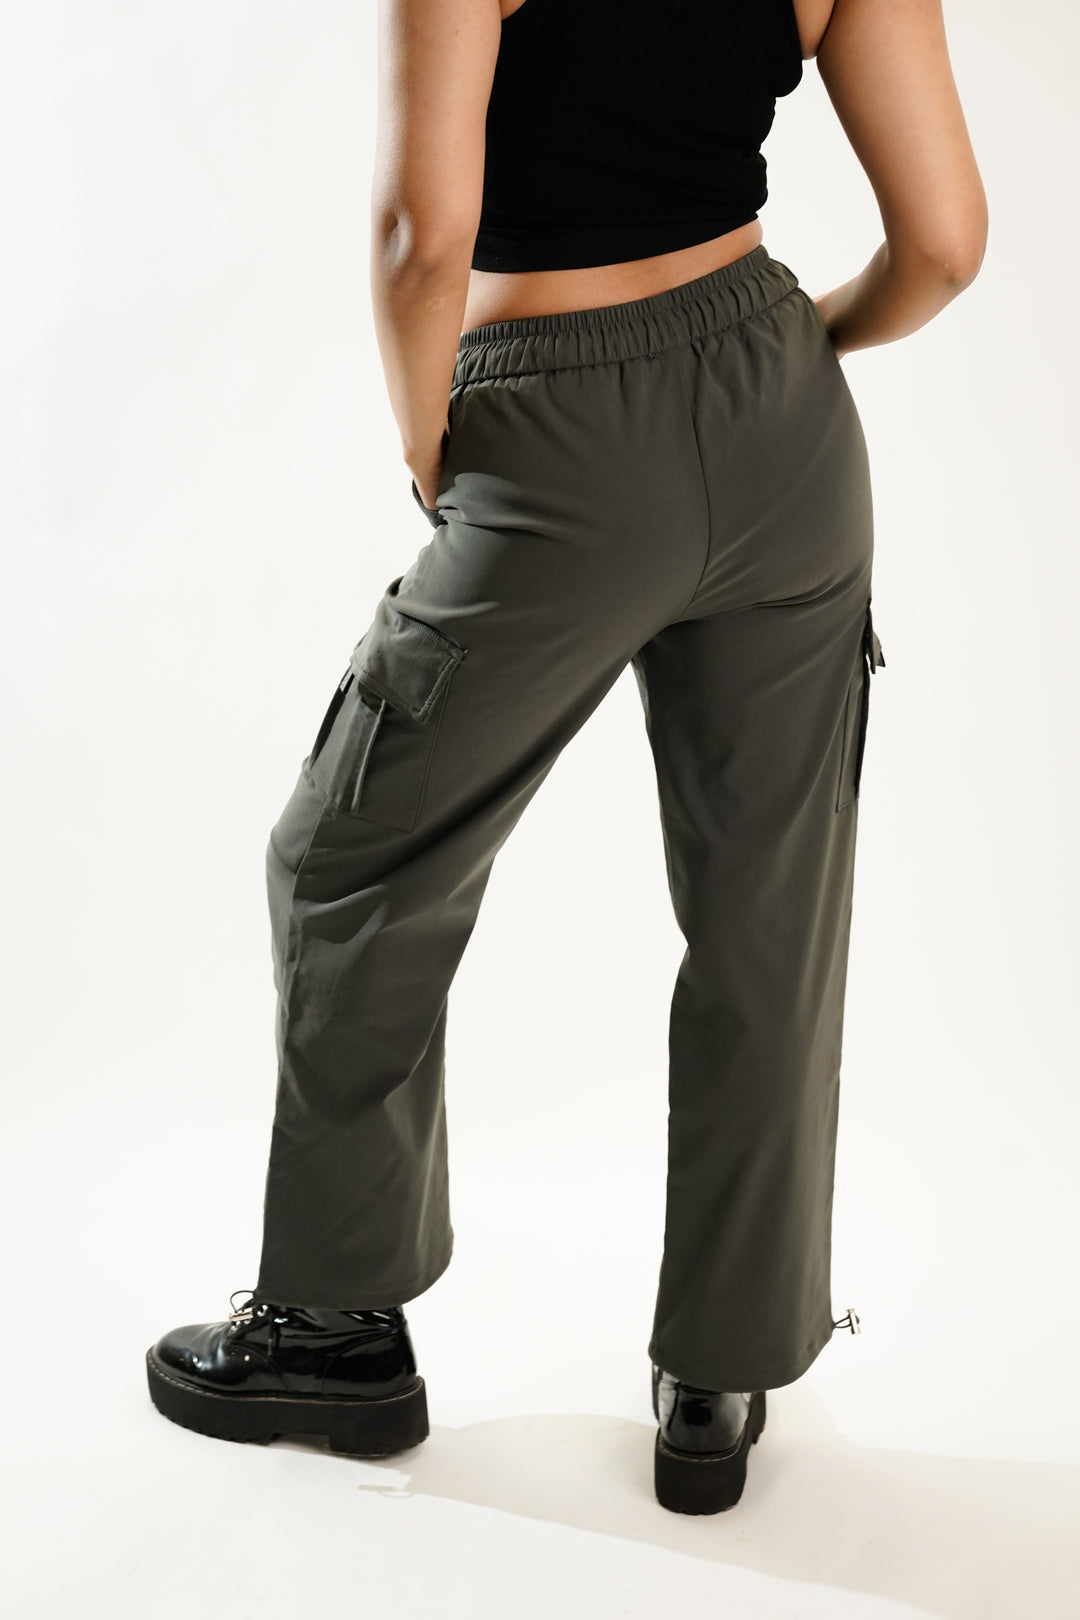 Trendy graphite utility pants for women